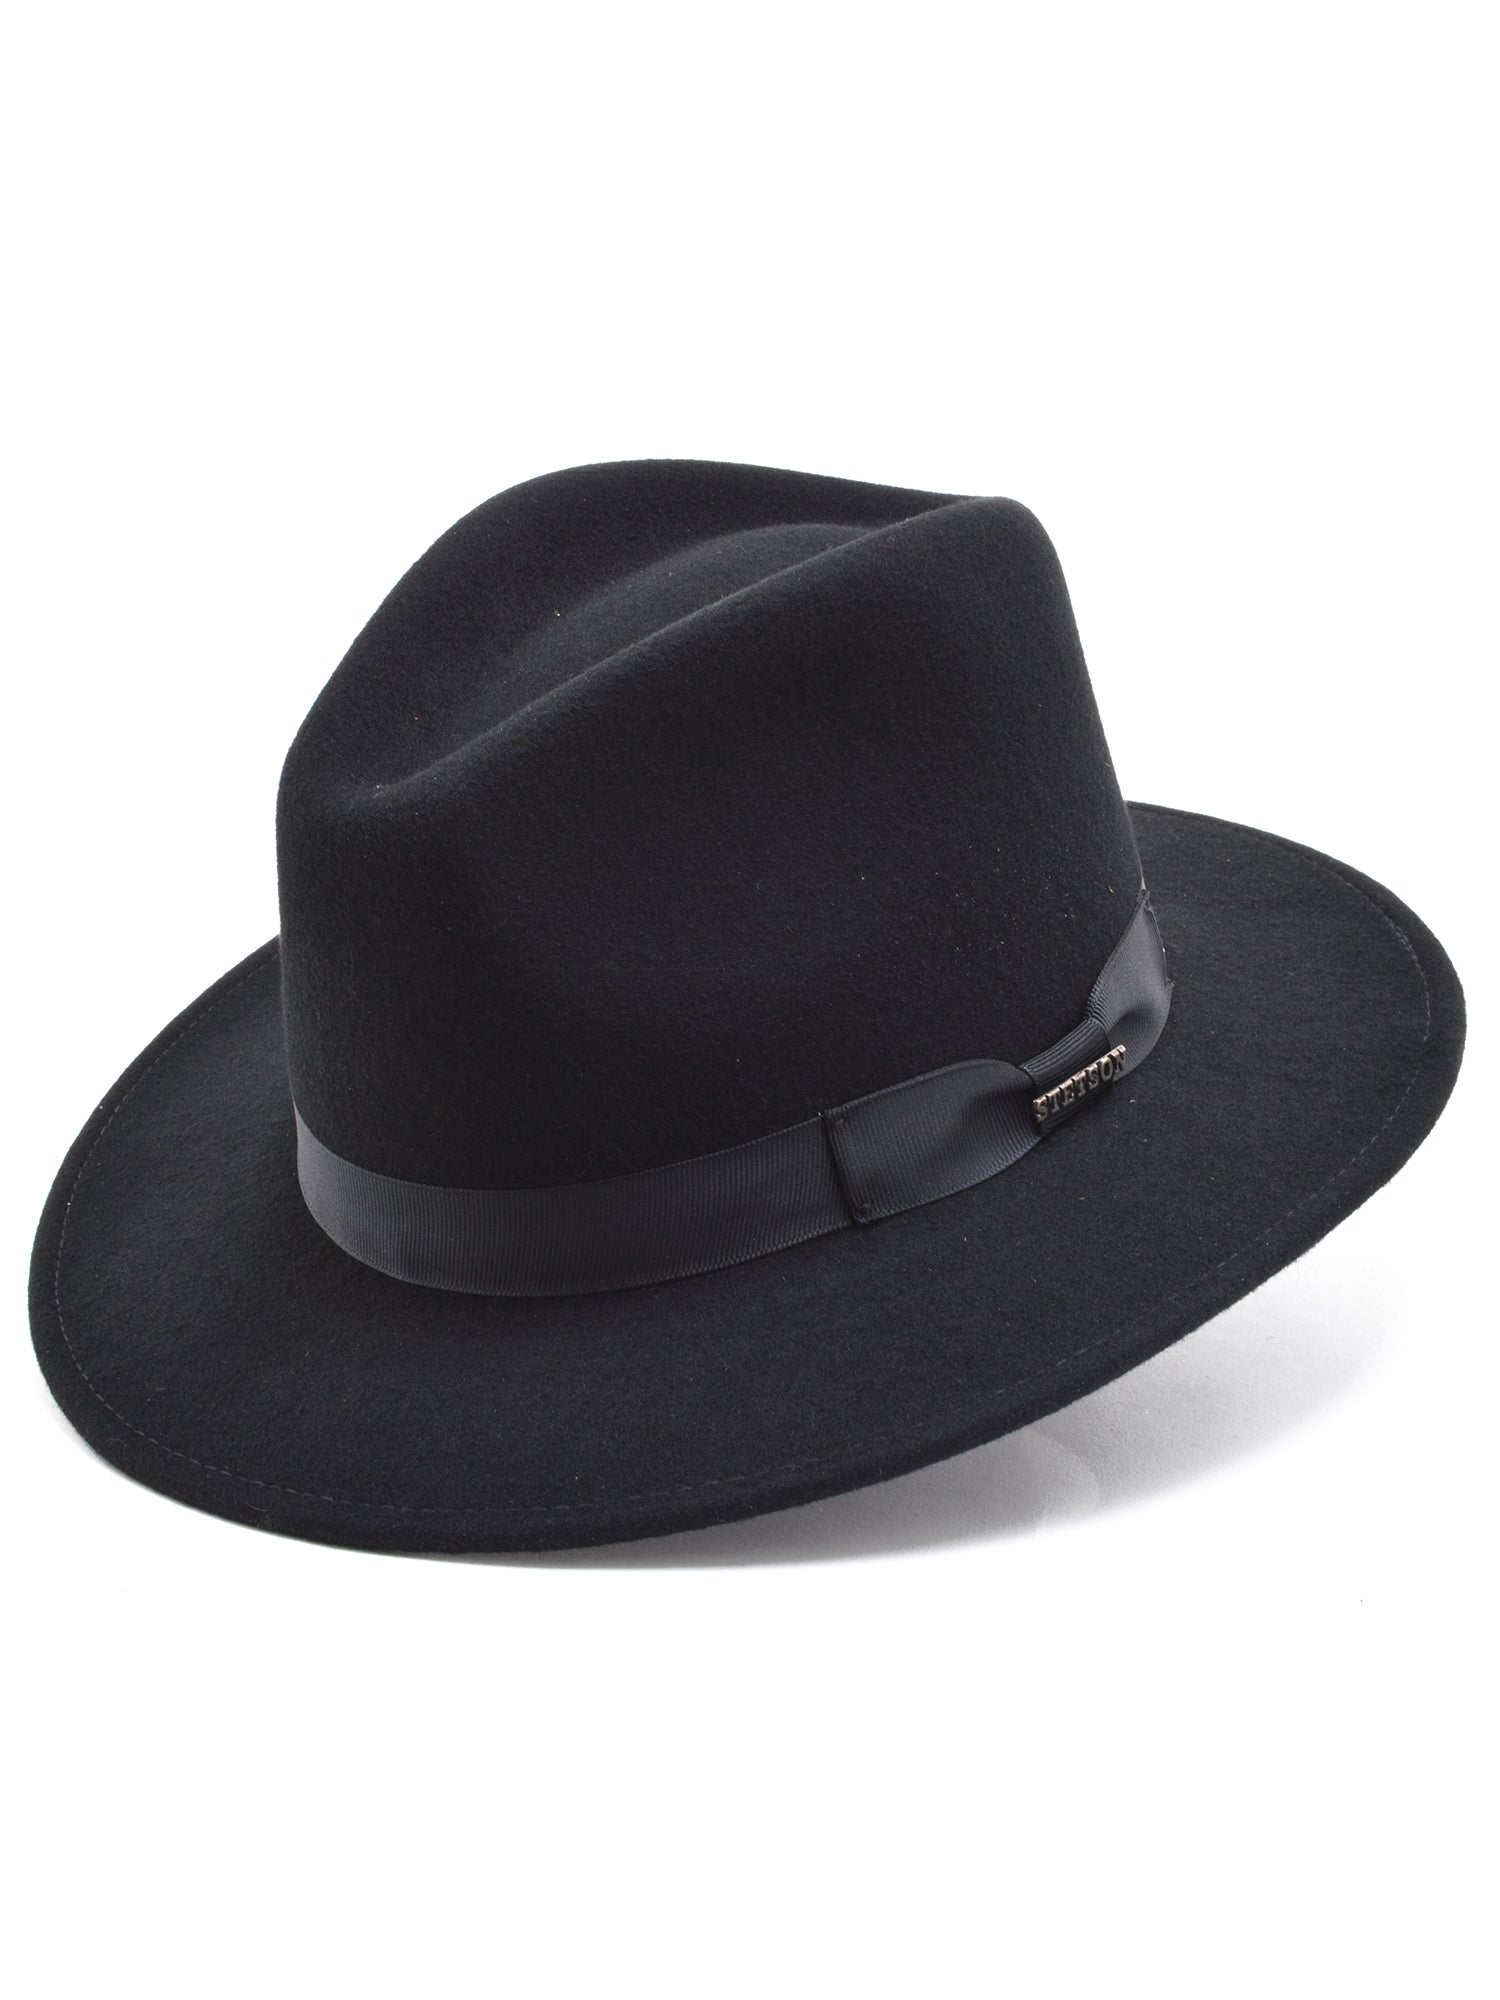 Stetson Wool Felt Markham Pinch Front Cowboy Hat in Black